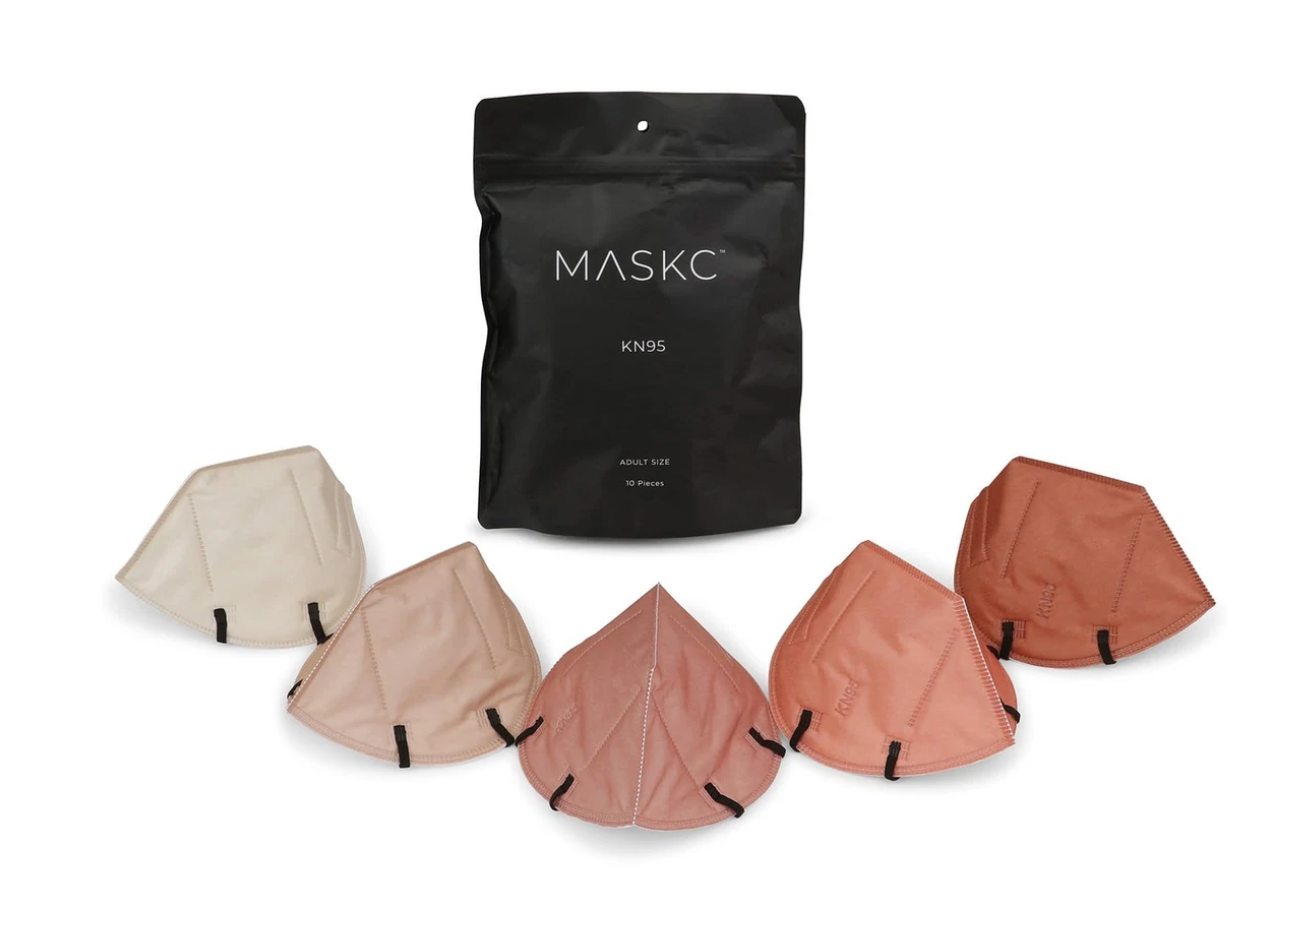 MASKC Blush Tones Variety KN95 Face Masks - 10 PACK